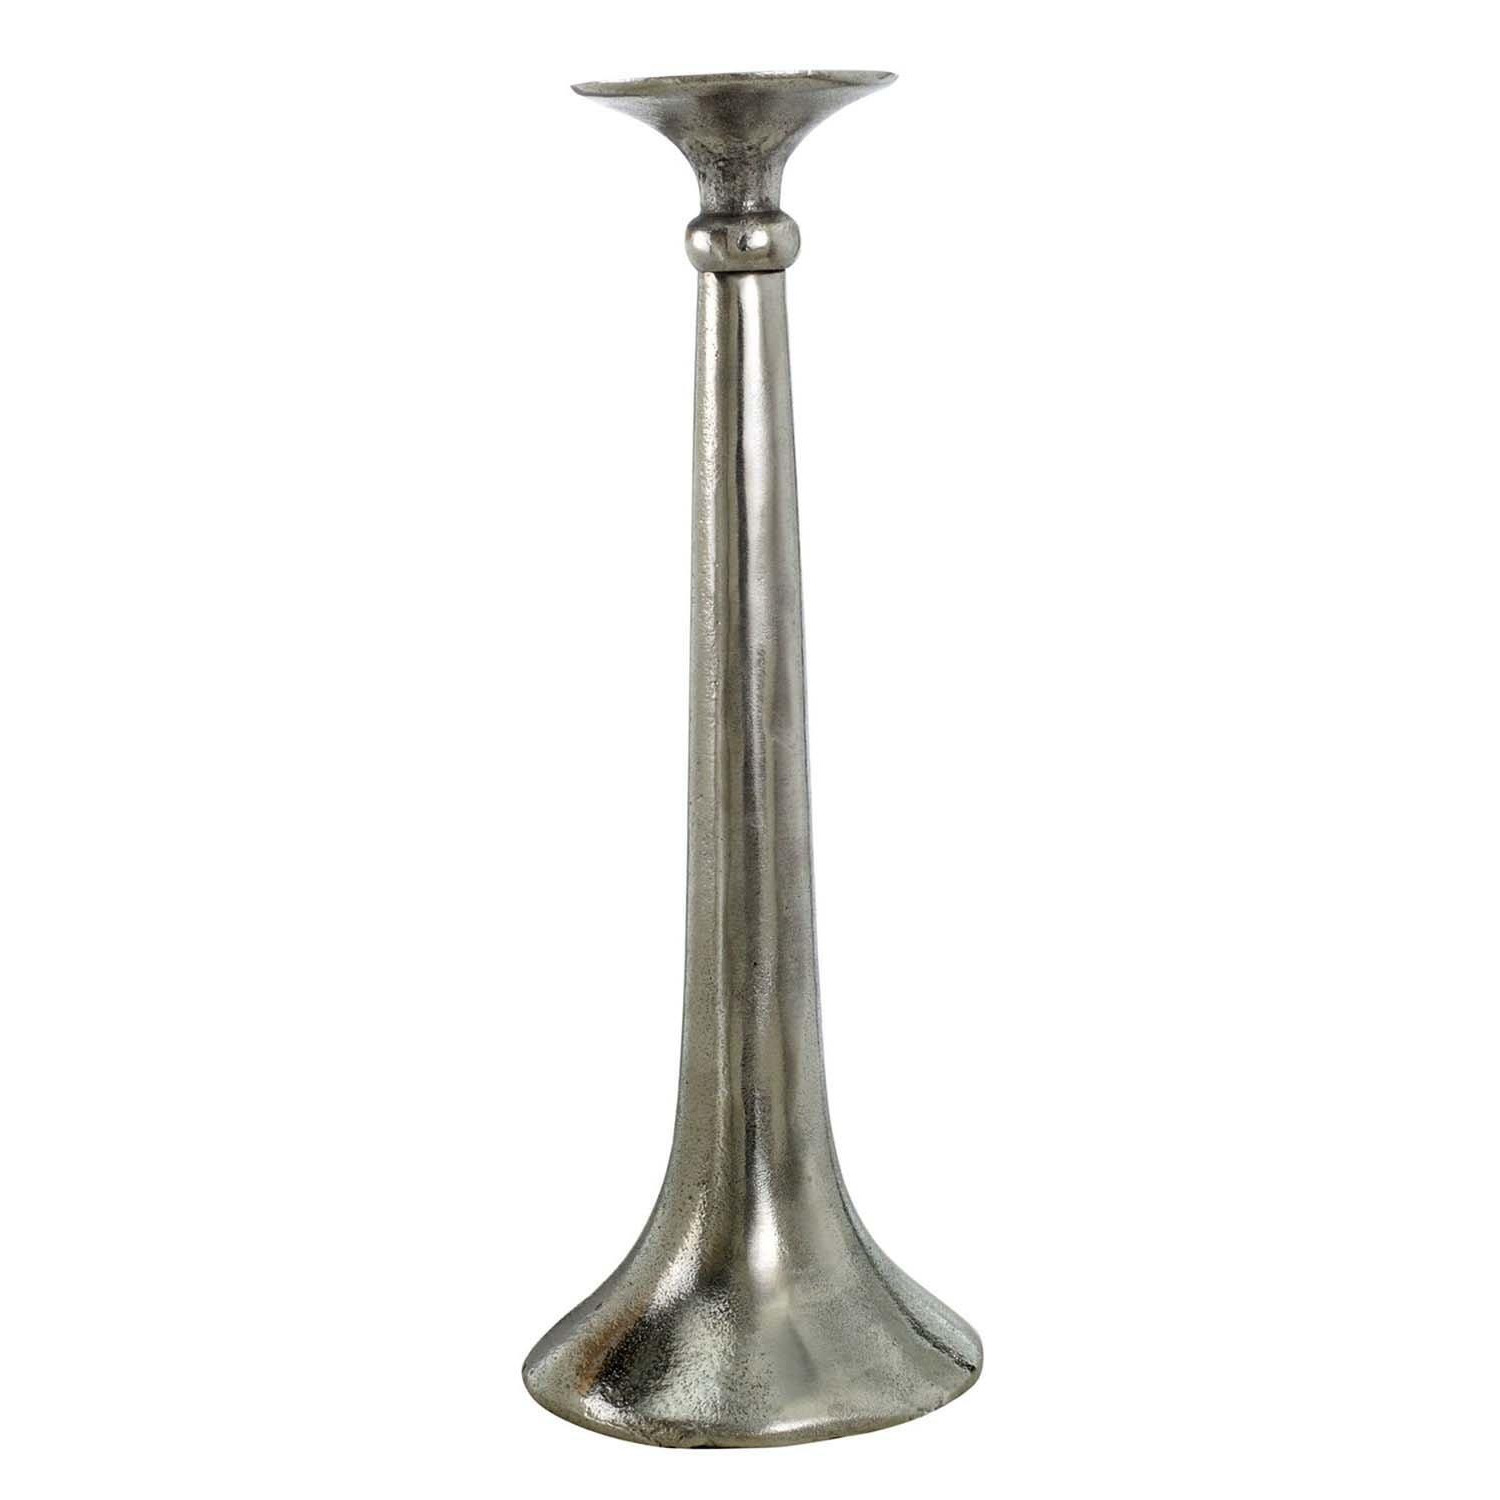 Aluminium Skirt Metal Candlestick - 44 cm Tall - image 1